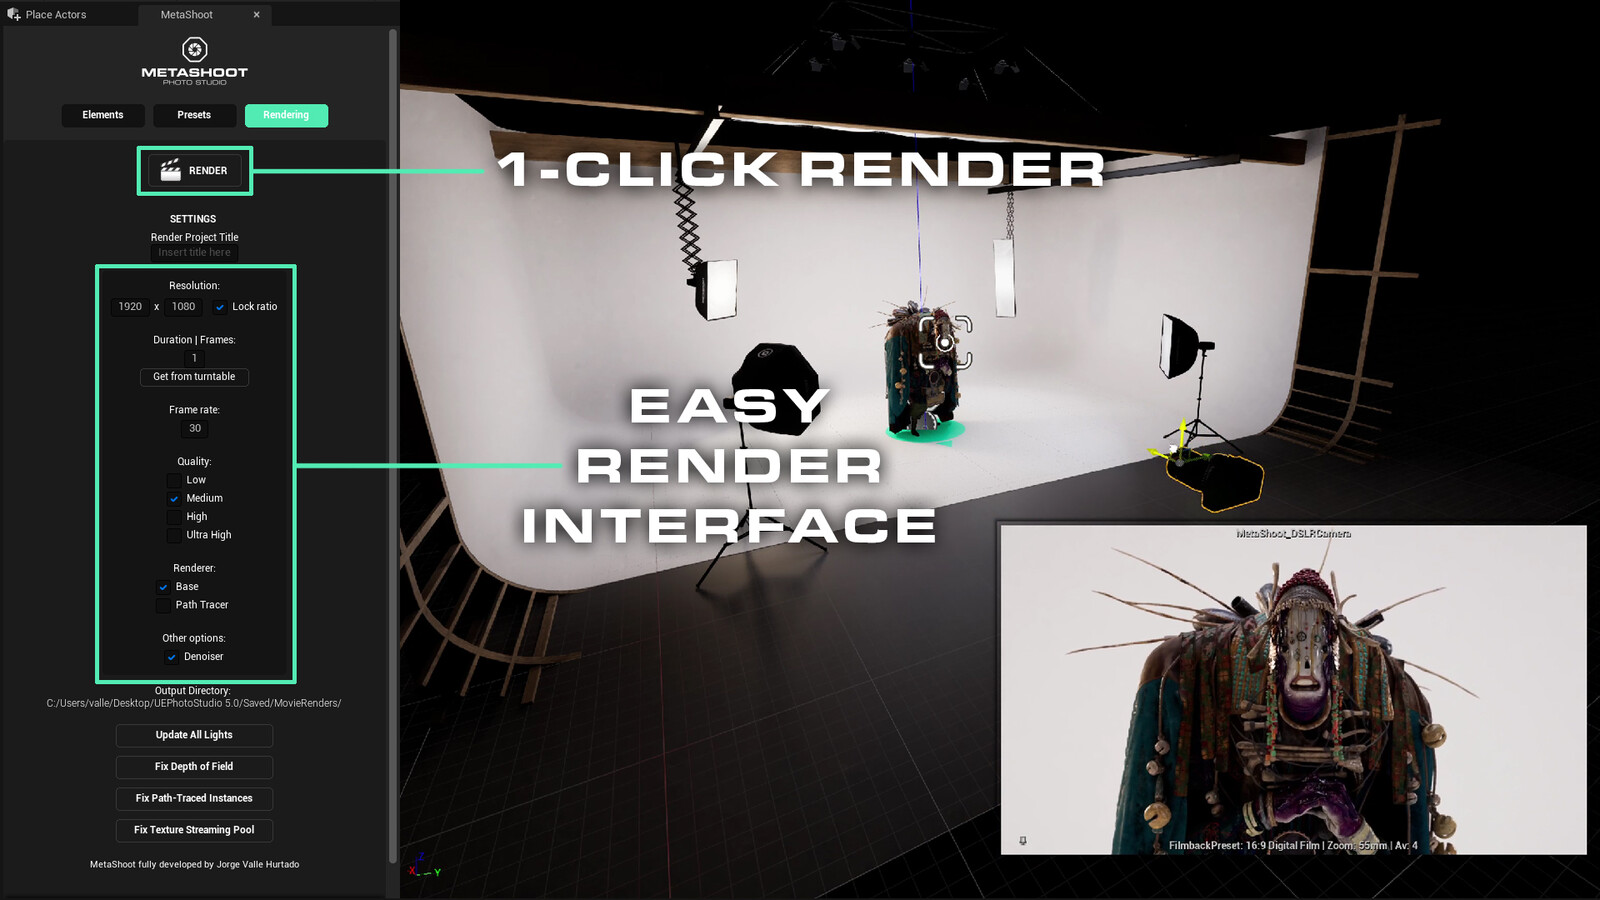 METASHOOT | Render Interface | 3D model by Pablo Munoz Gomez | Photo Studio Digital Twin for Unreal Engine - by VINZI